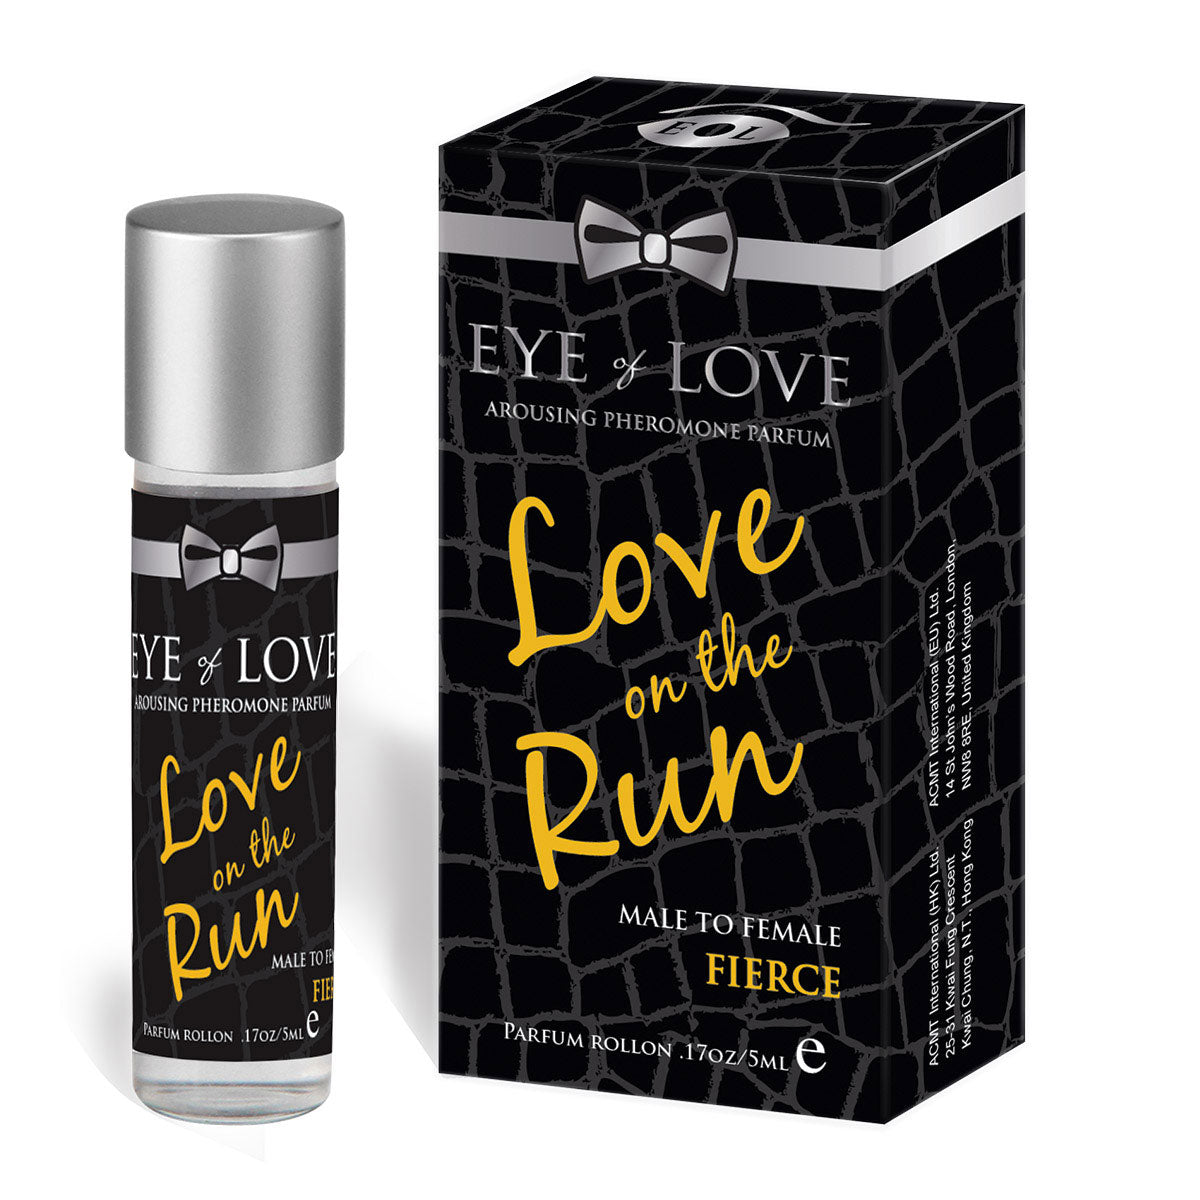 Eye of Love - Love on the Run Mini Pheromone Parfum 5ml - Fierce (M to F)